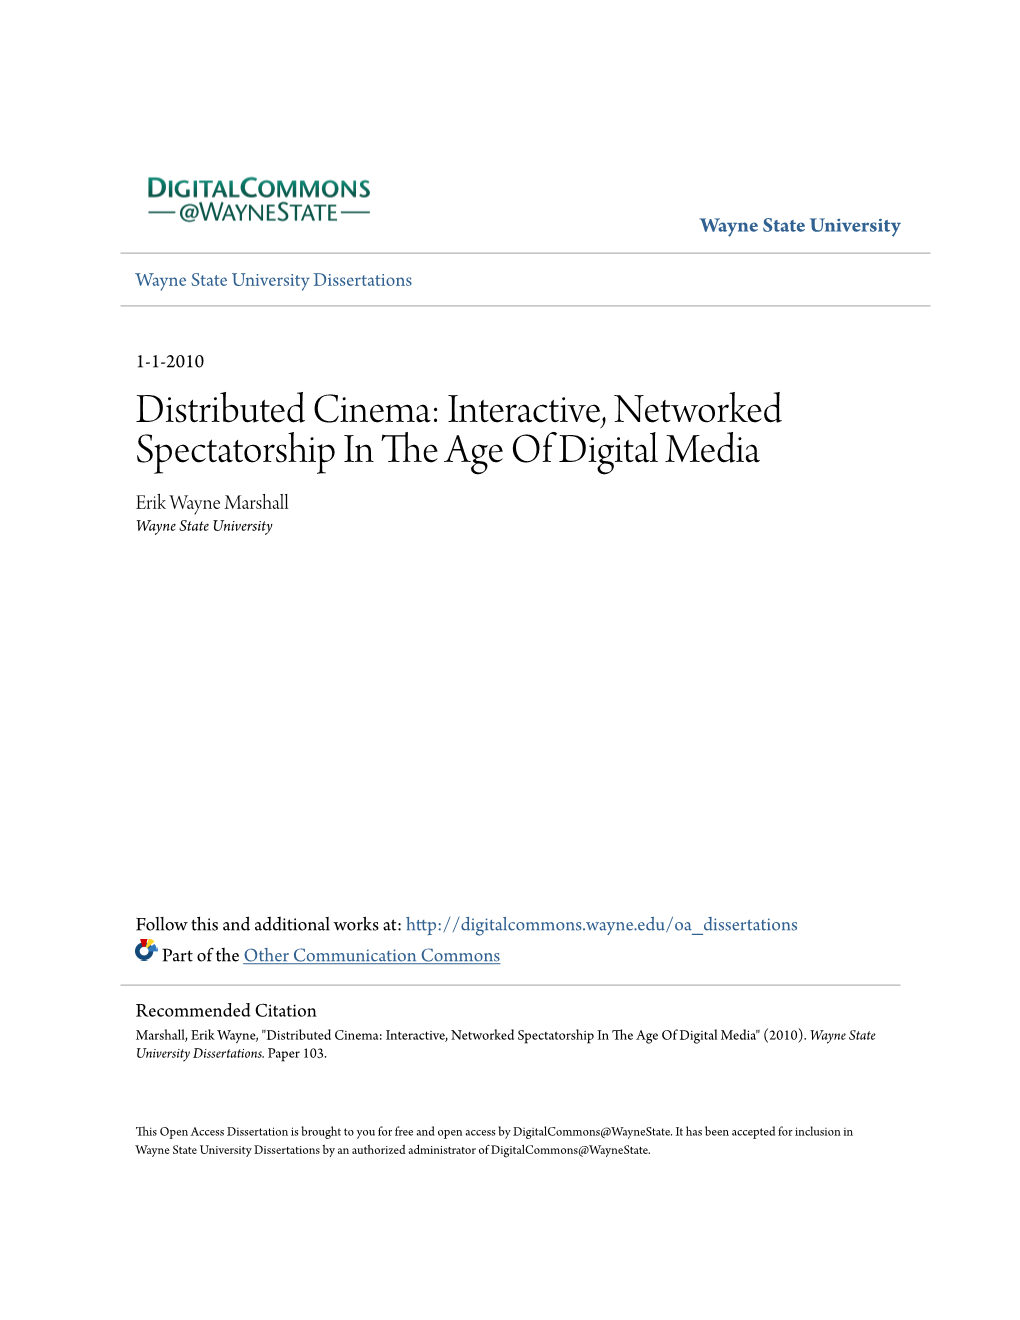 Distributed Cinema: Interactive, Networked Spectatorship in the Age of Digital Media Erik Wayne Marshall Wayne State University